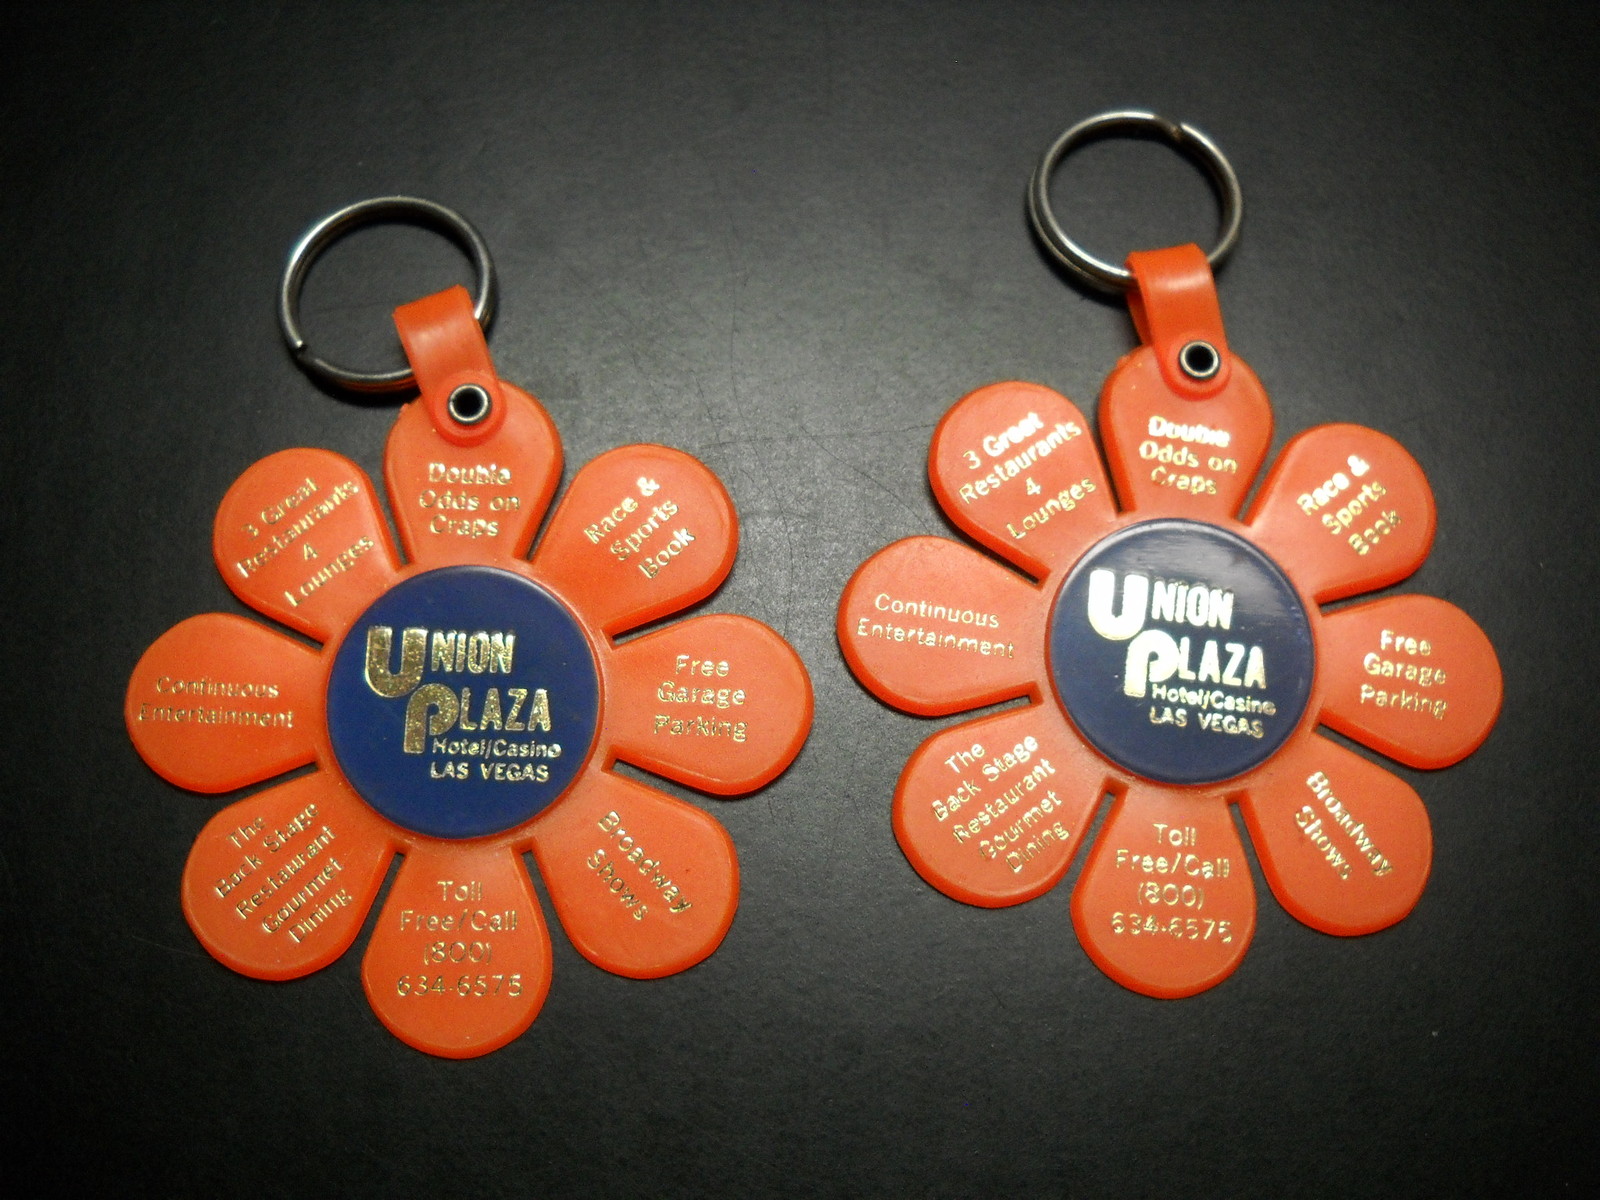 Union Plaza Hotel Casino Las Vegas Key Chain Set of Two Orange Flower Blooms - $6.99